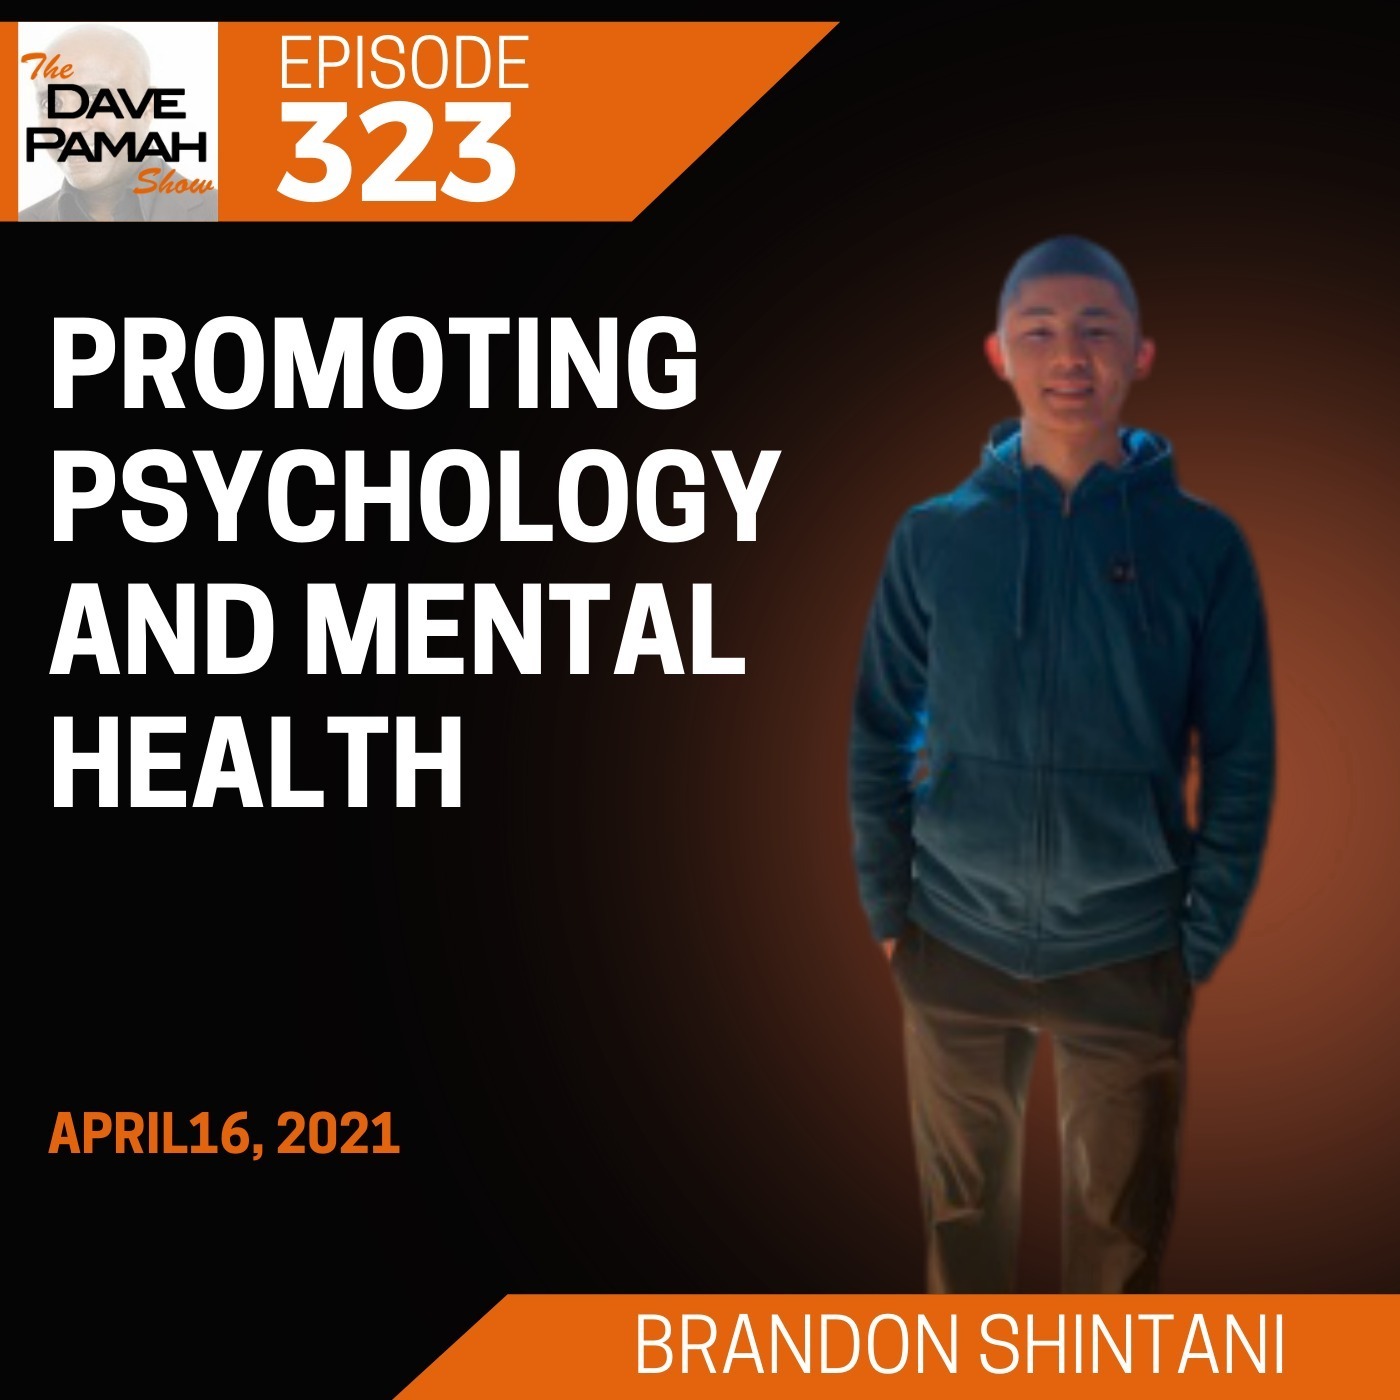 Promoting psychology and mental health with Brandon Shintani Image